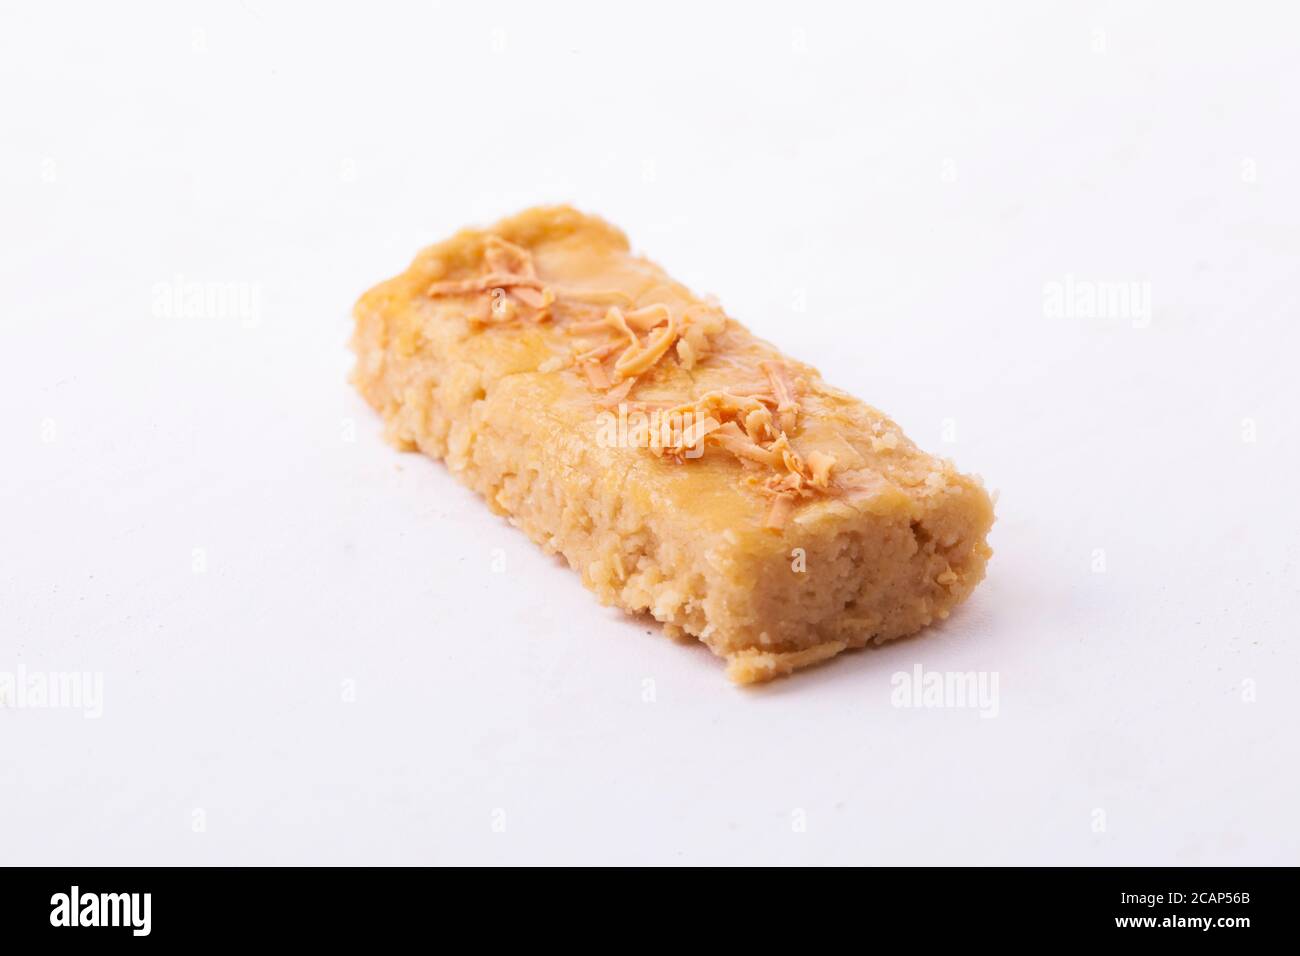 Kaasstengels o Kastengel Kue Keju o galletas de varilla de queso de Indonesia holandés aisladas sobre fondo blanco Foto de stock